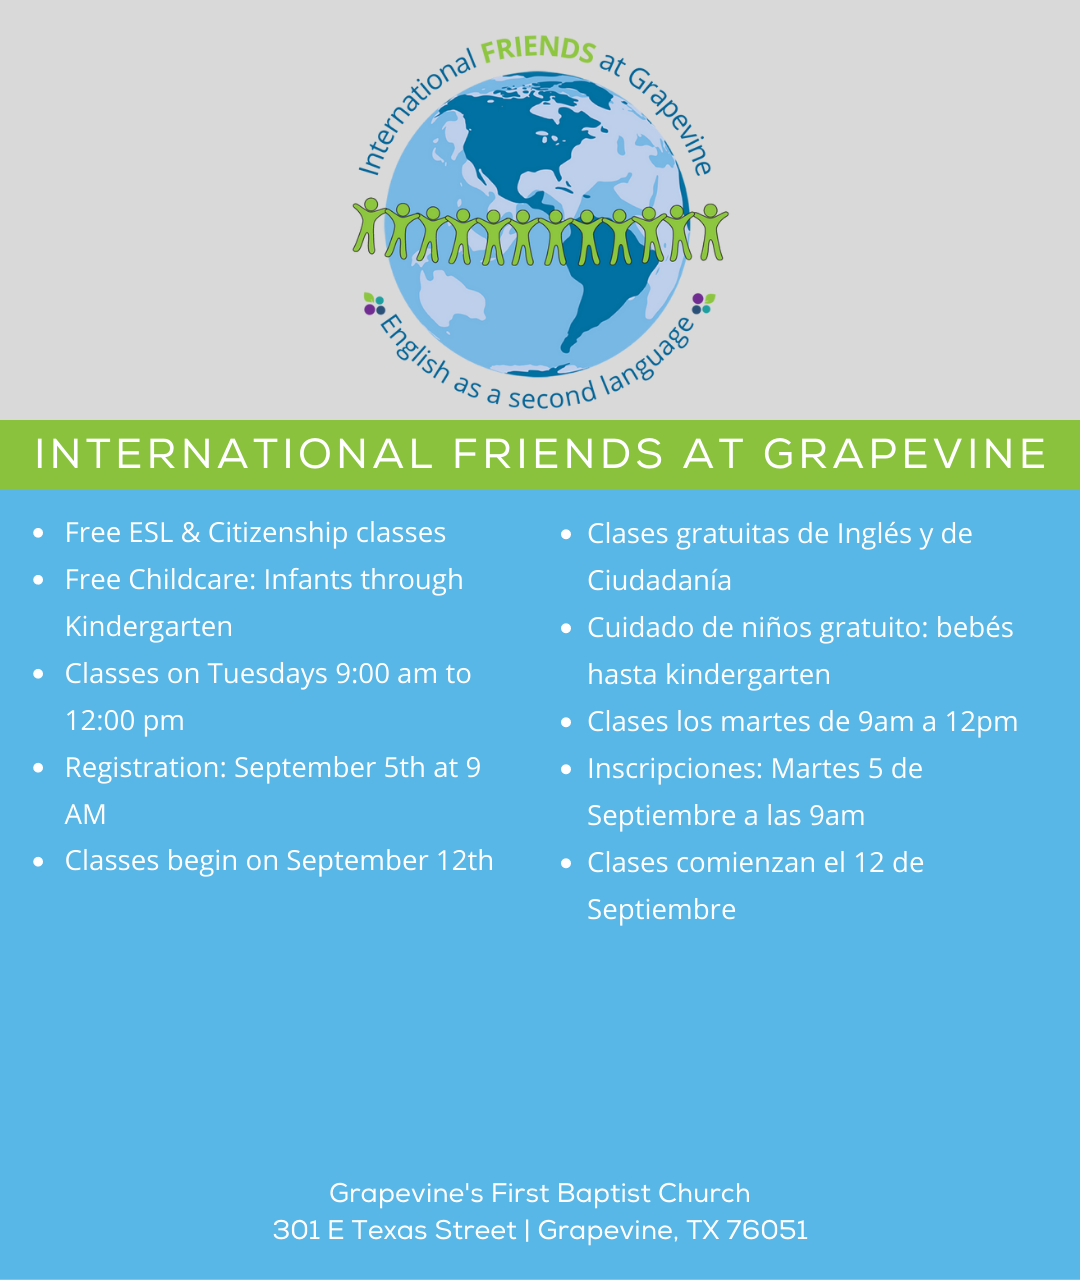 INTERNATIONAL FRIENDS AT GRAPEVINE (1080 x 1280 px)